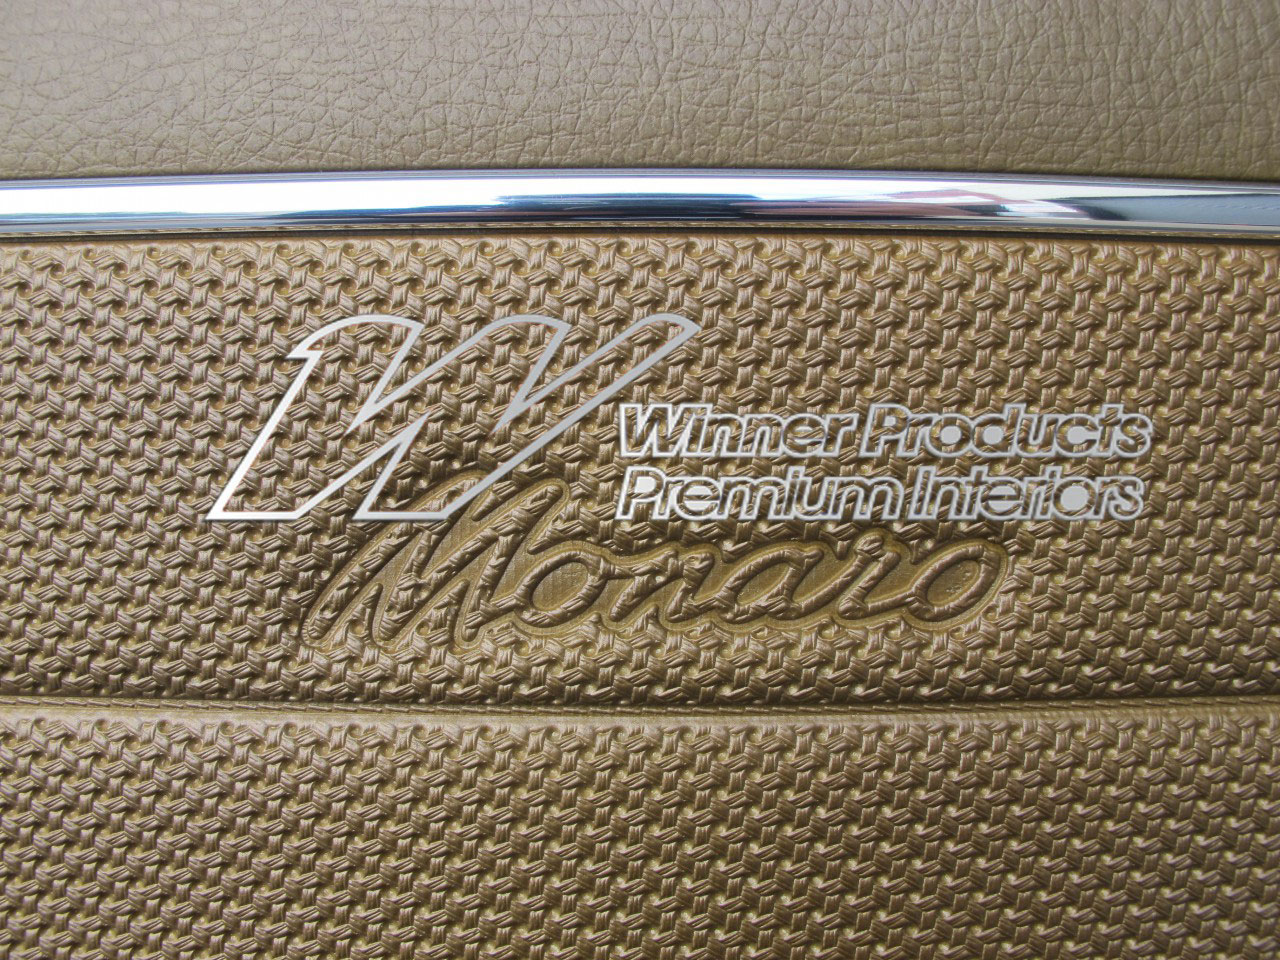 Holden Monaro HT Monaro GTS Coupe 11Y Antique Gold & Houndstooth Door Trims (Image 5 of 5)